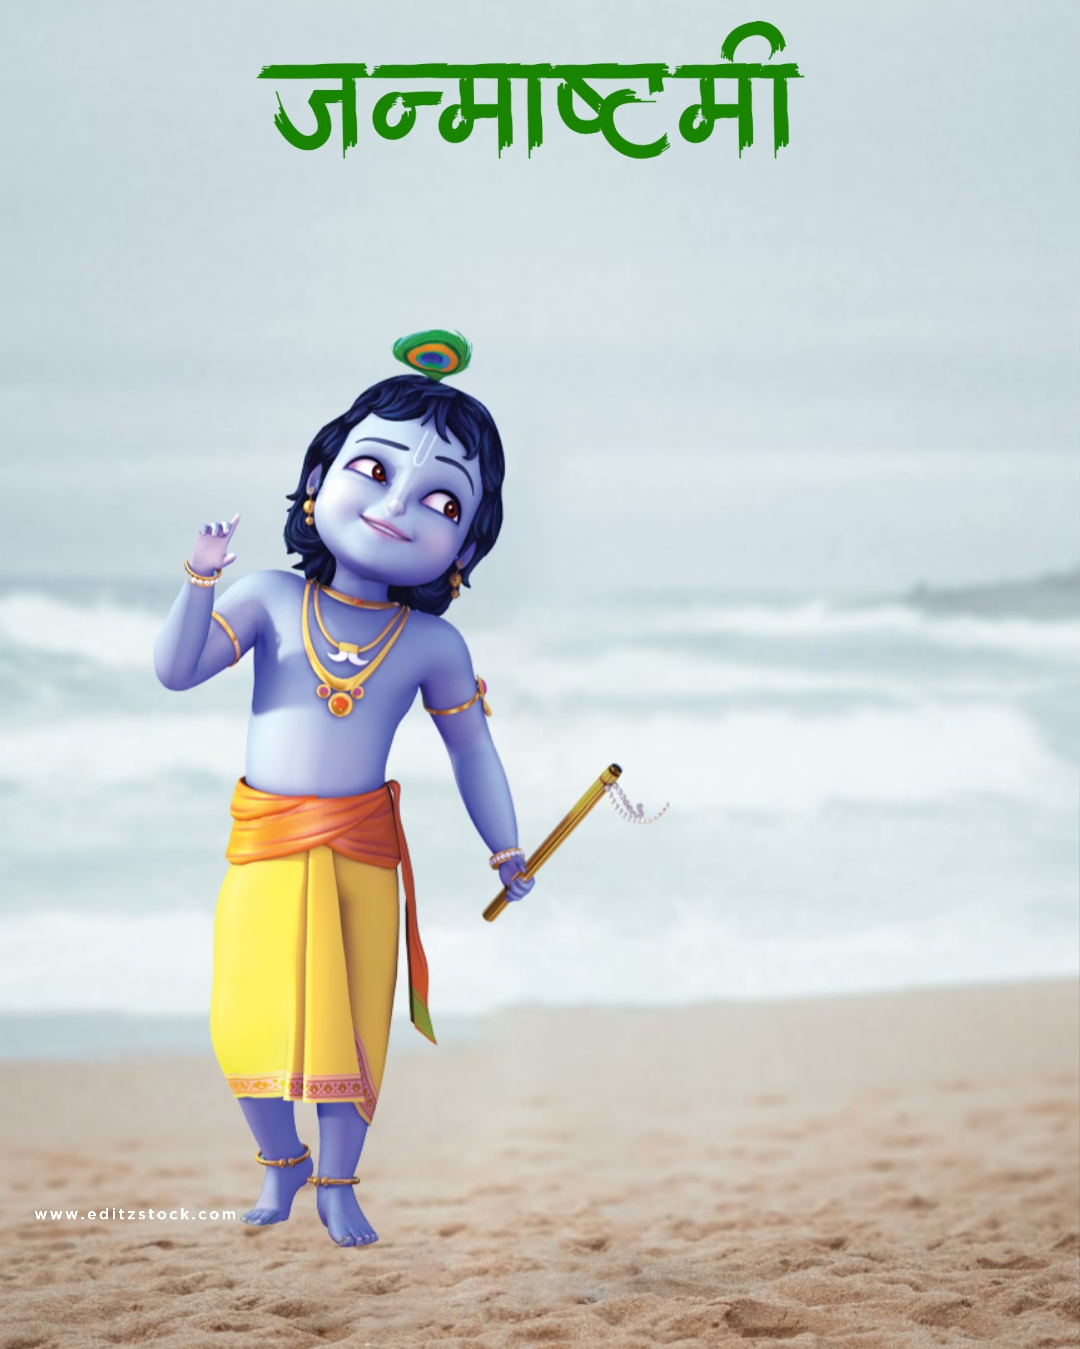 Happy Krishna Janmashtami editing background